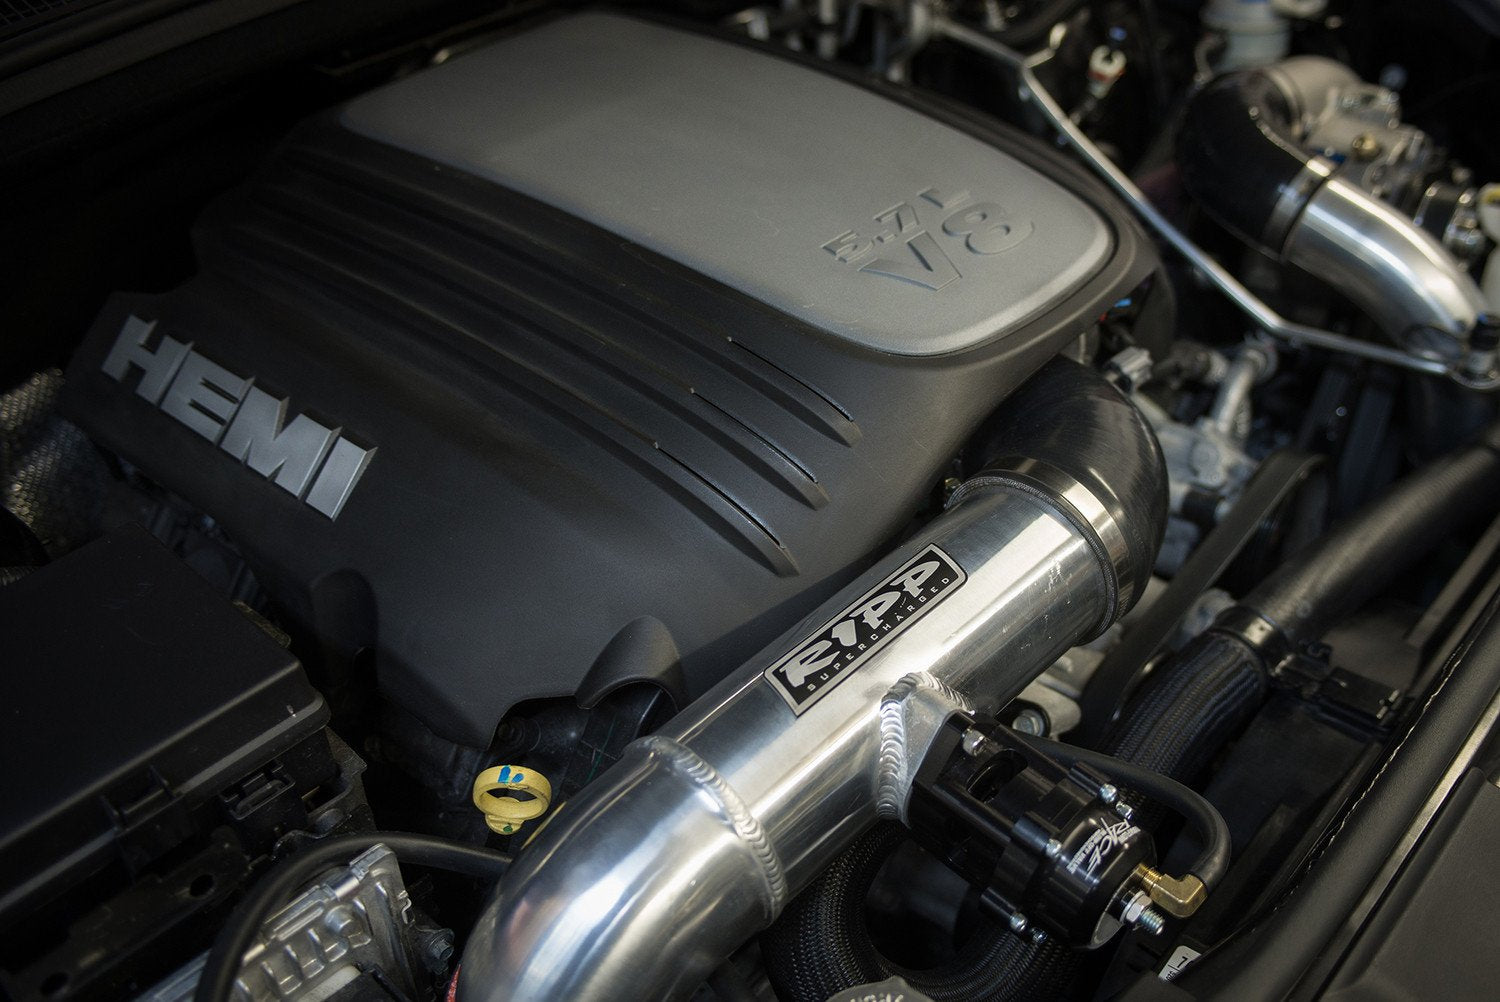 2011-2014 5.7 Grand Cherokee Hemi Supercharger Kit